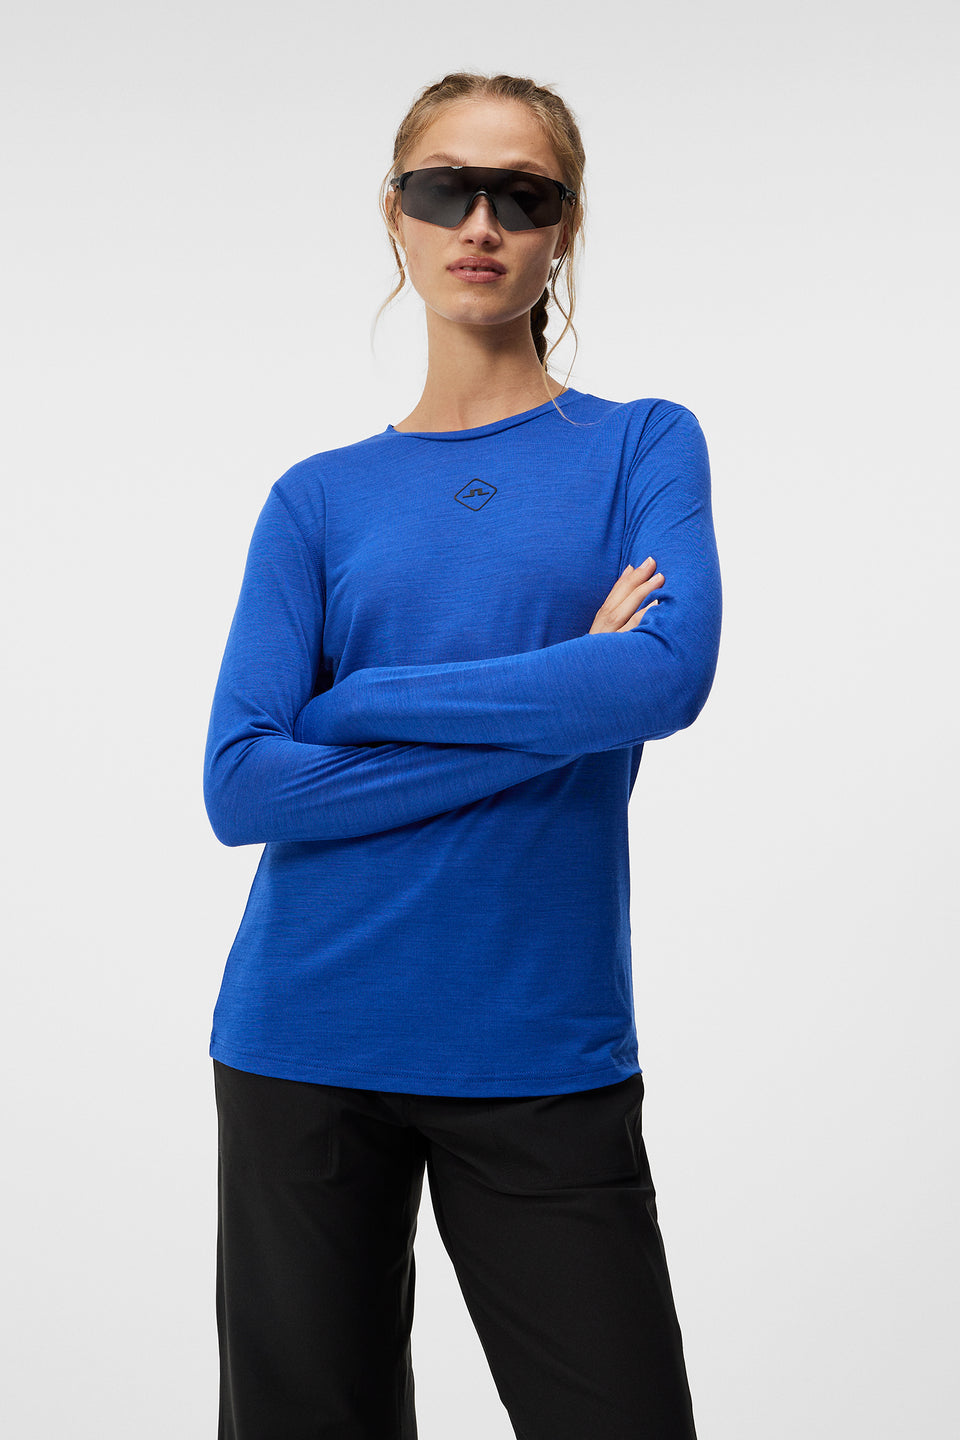 Shauna Wool LS T-shirt / Dazzling Blue